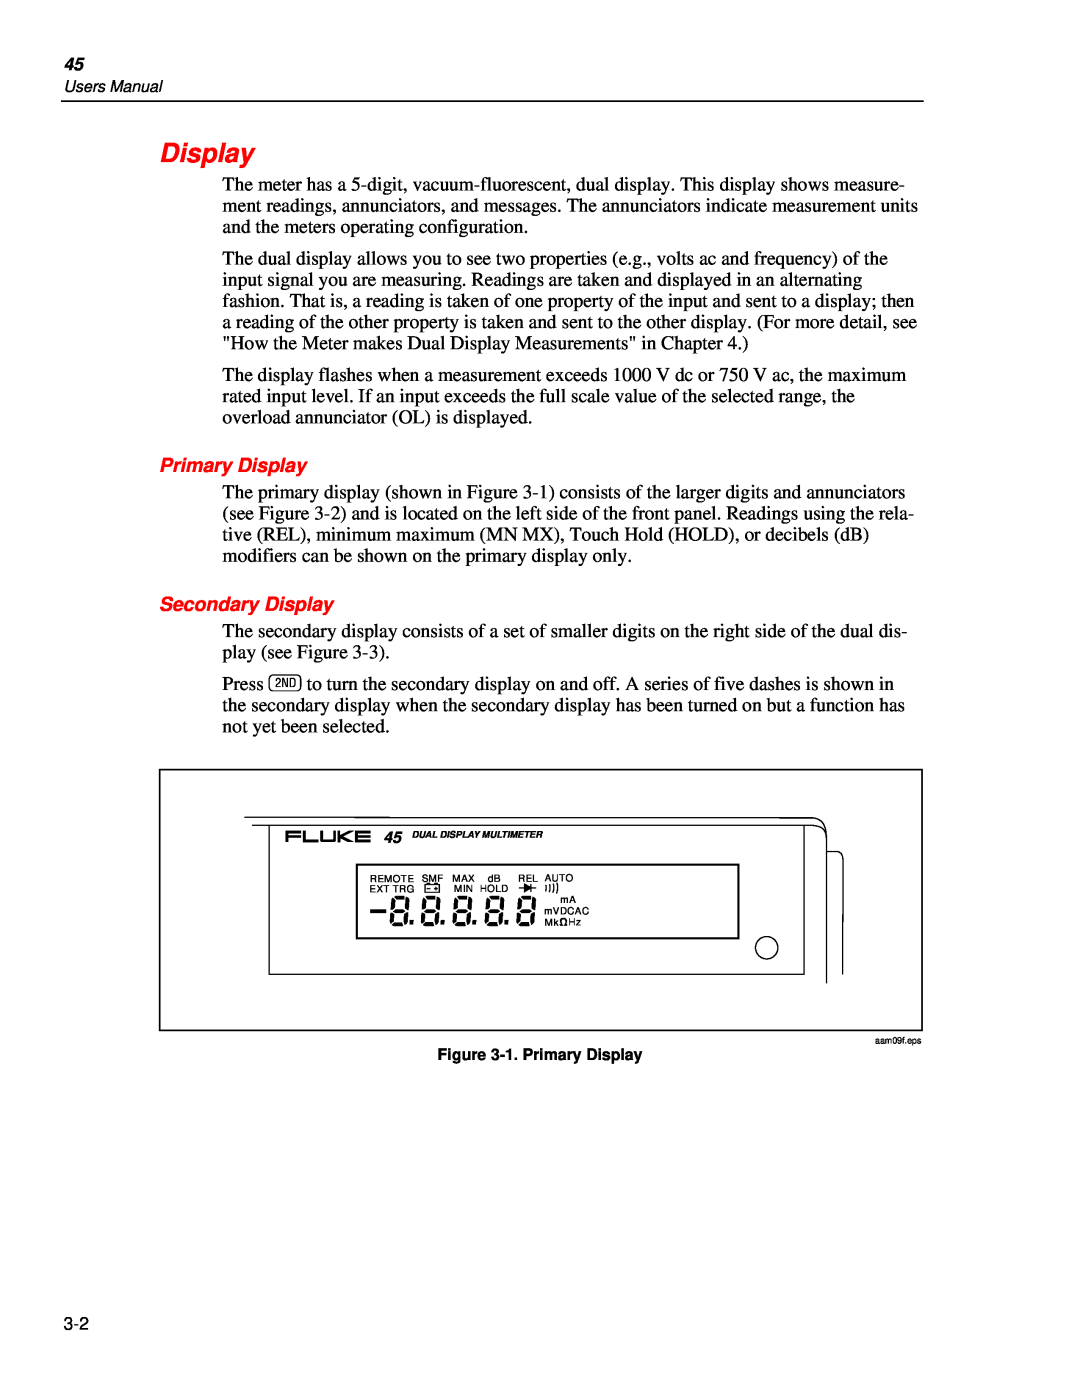 Fluke 45 user manual Primary Display, Secondary Display 